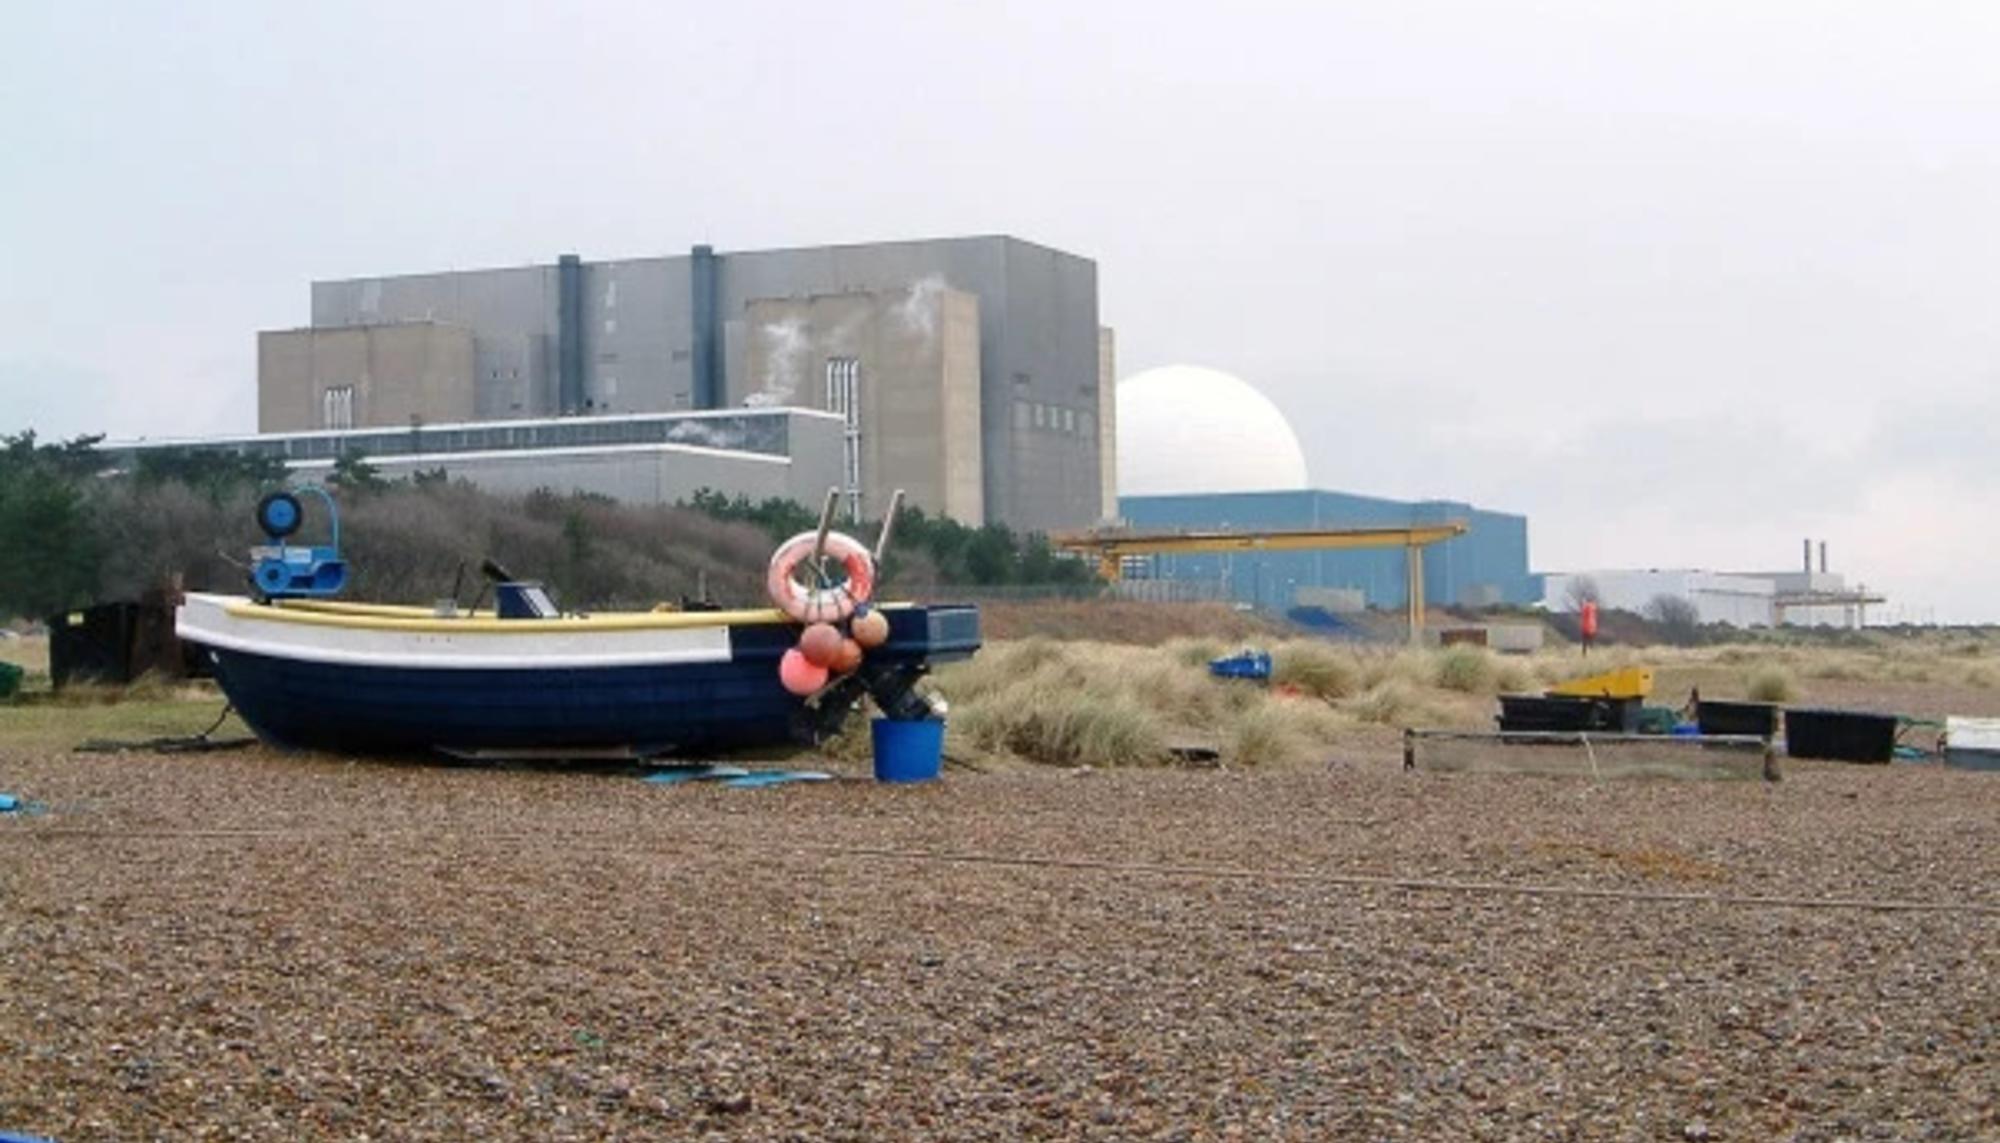 La central nuclear de Sizewell, junto a la playa, preocupa a los/as residentes. Fuente: Beyond Nuclear International